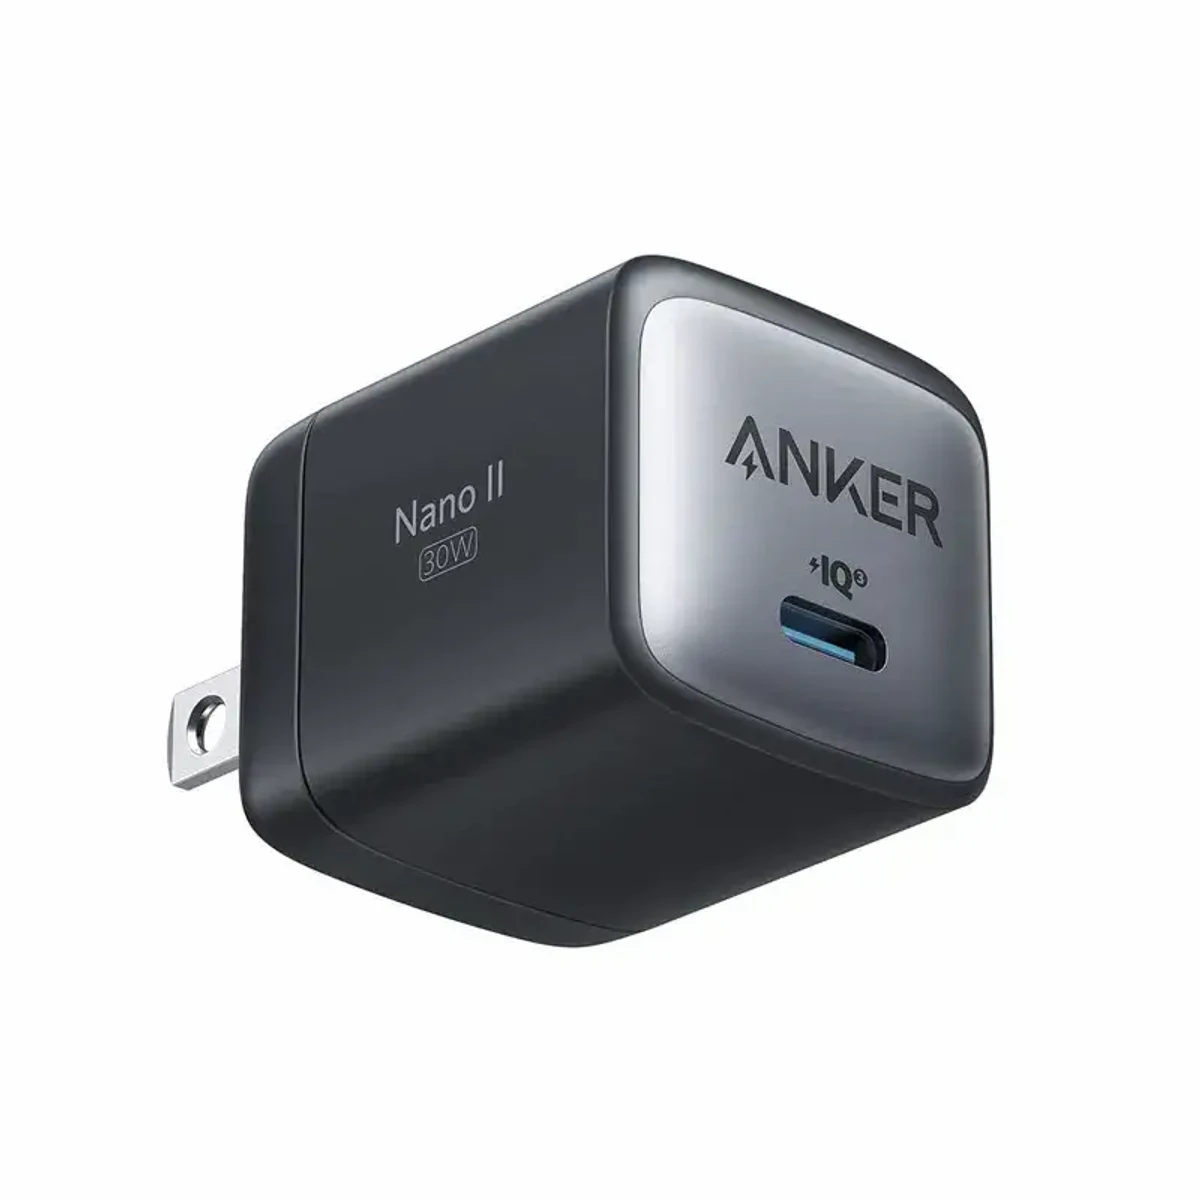 Anker 711 Nano II 30W USB C Charger